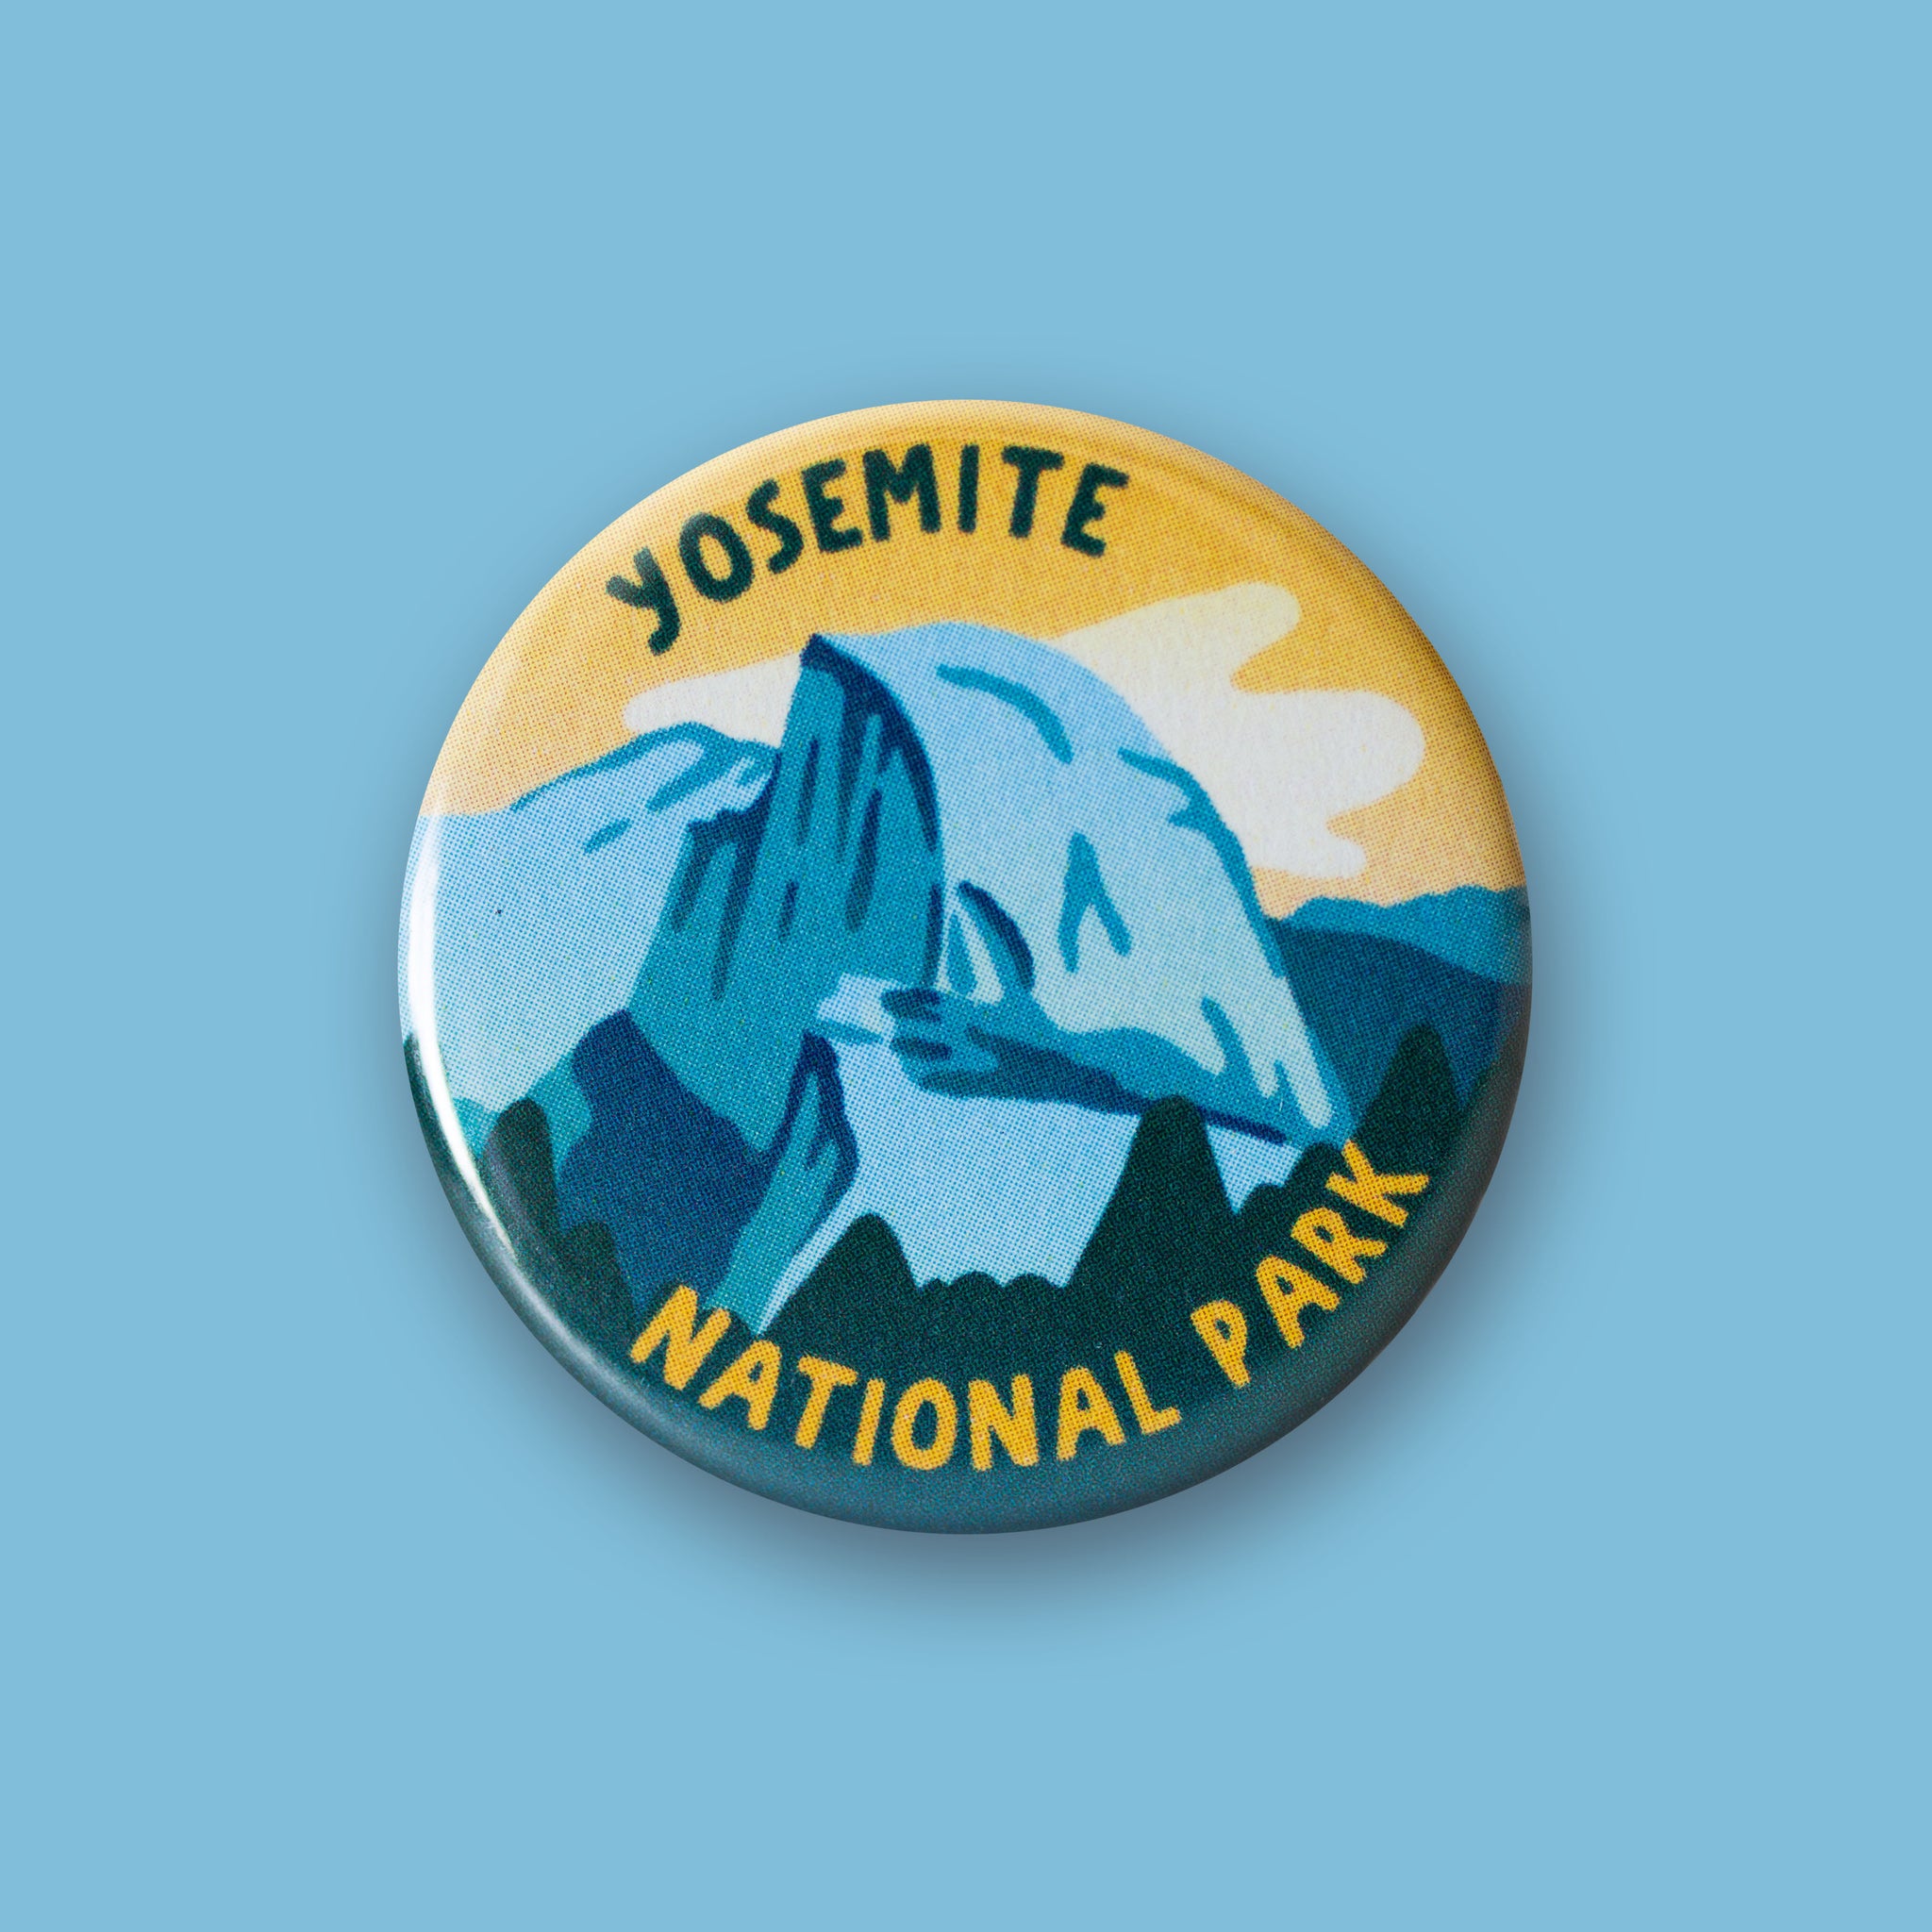 Yosemite National Park Merit Badge Button